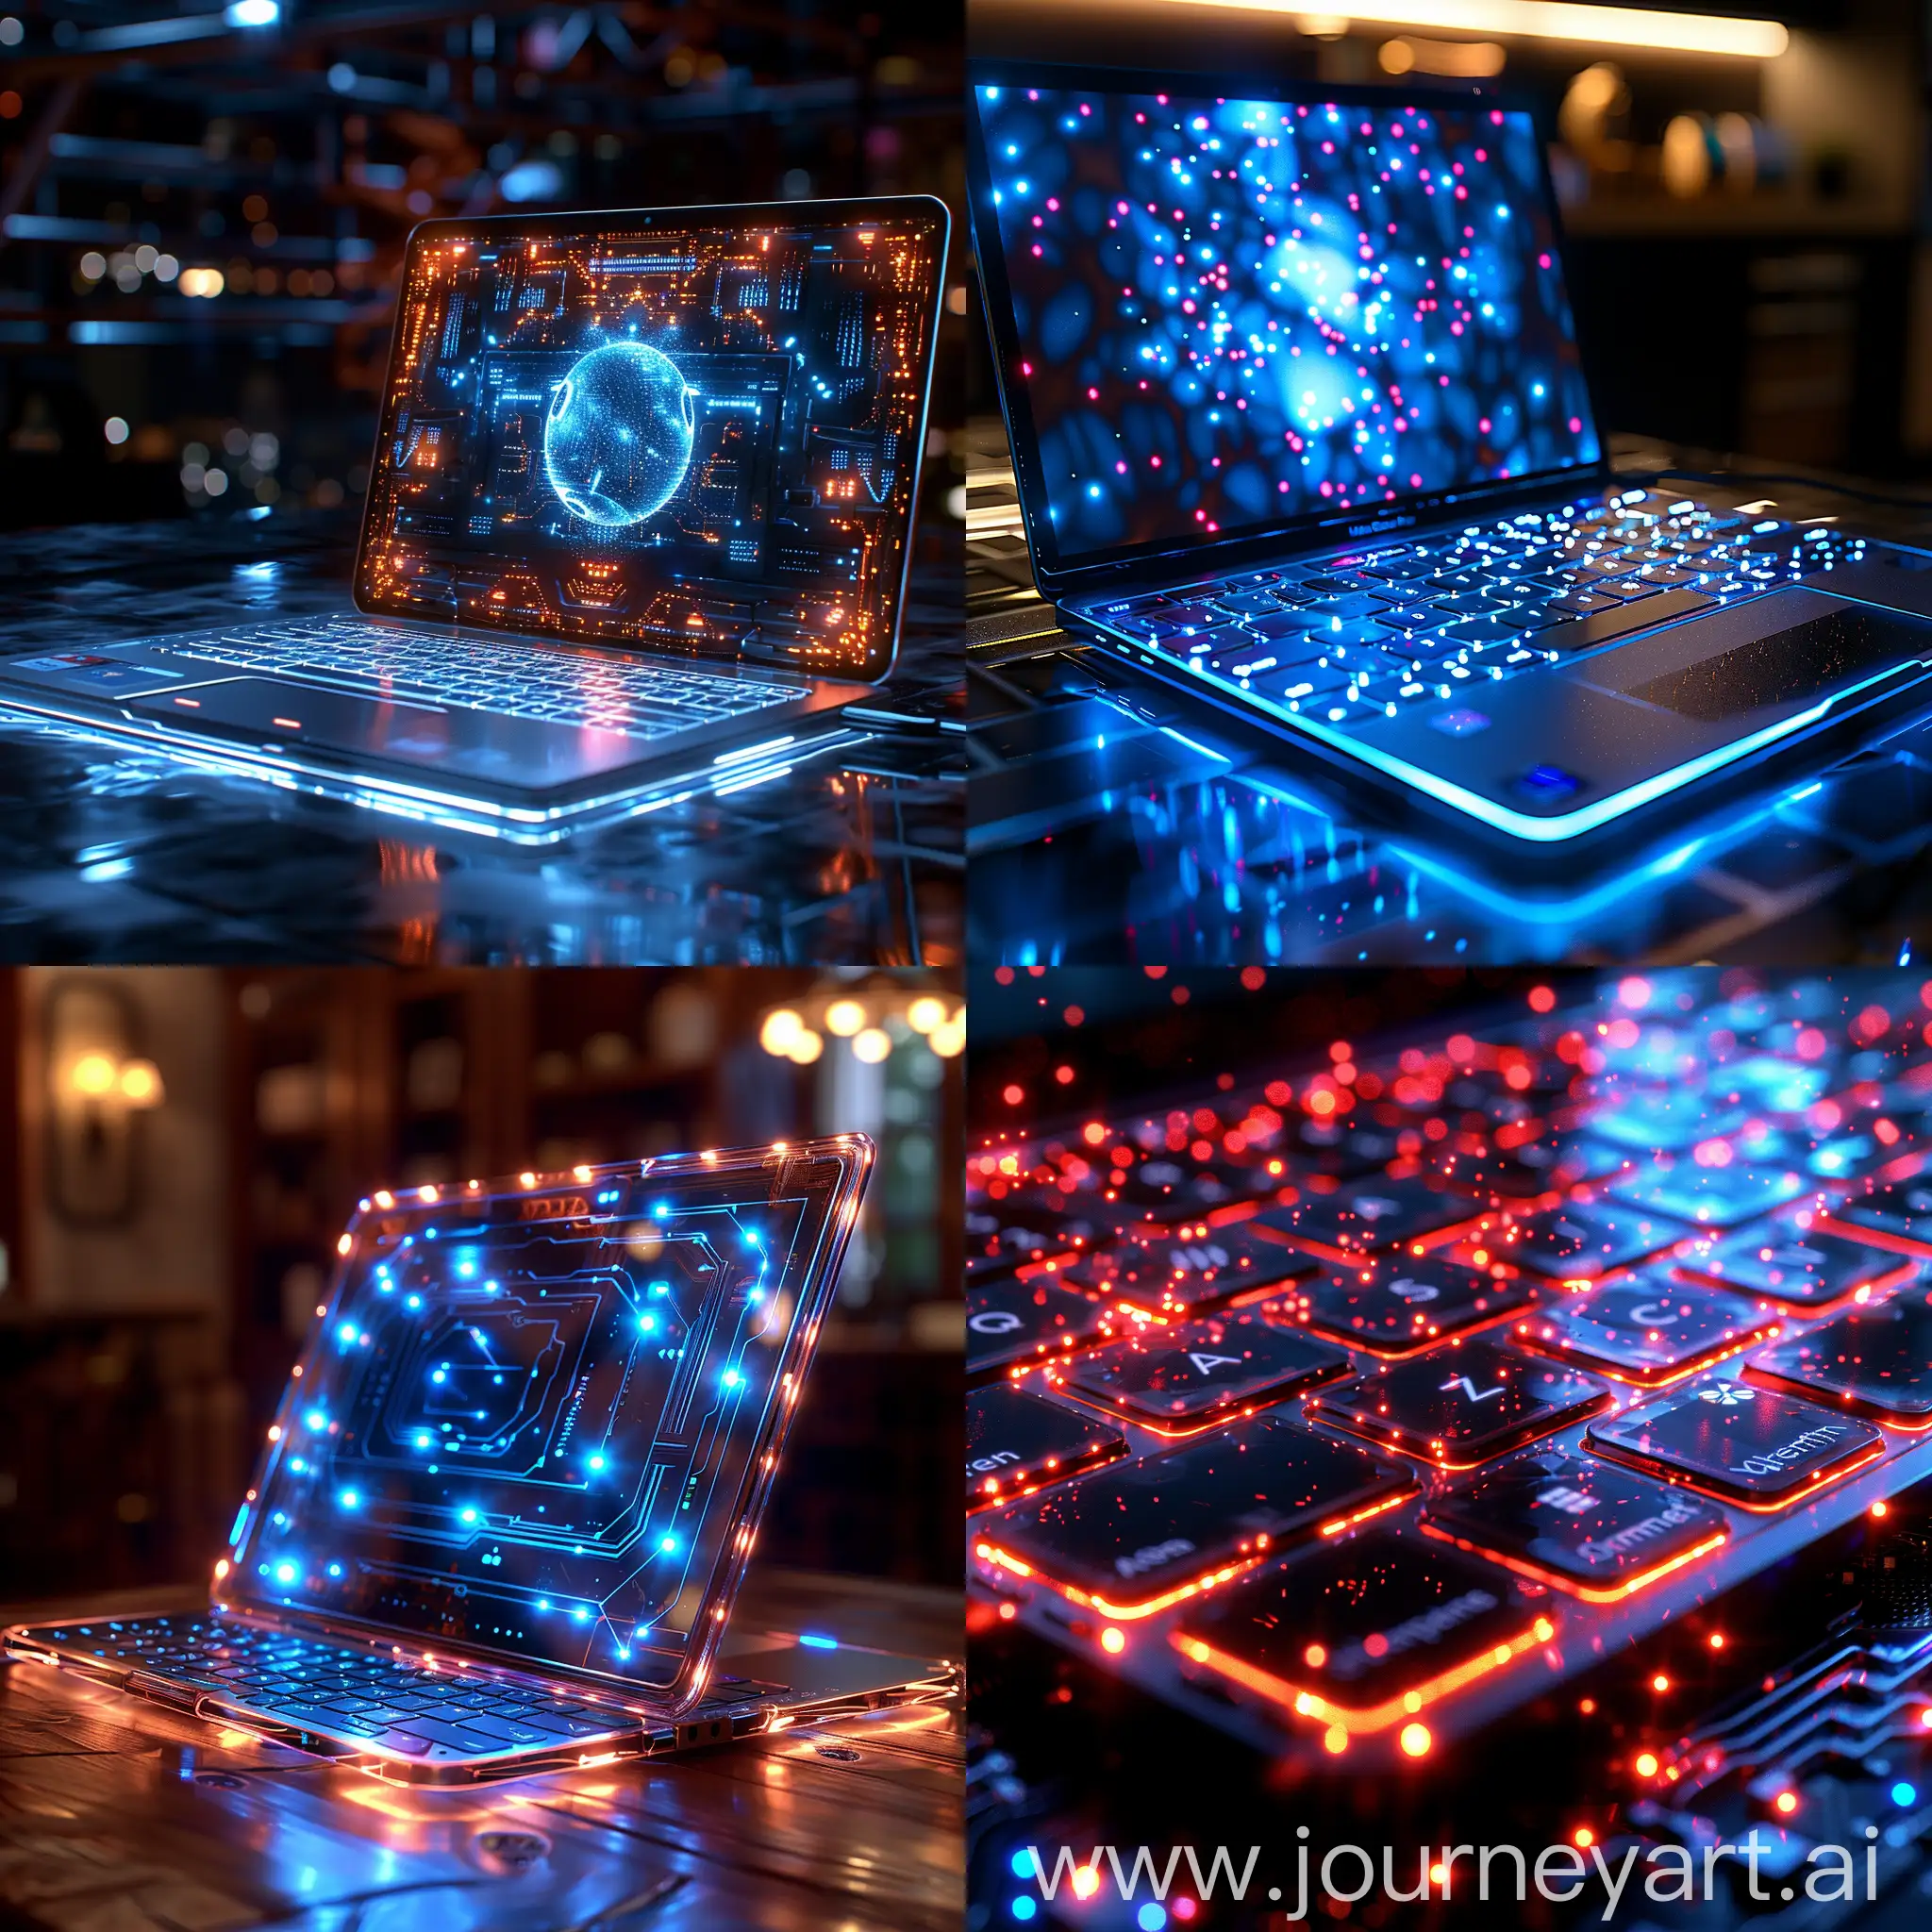 Futuristic-UltraModern-Laptop-with-Nanotechnology-Materials-and-EnergyEfficient-Lighting